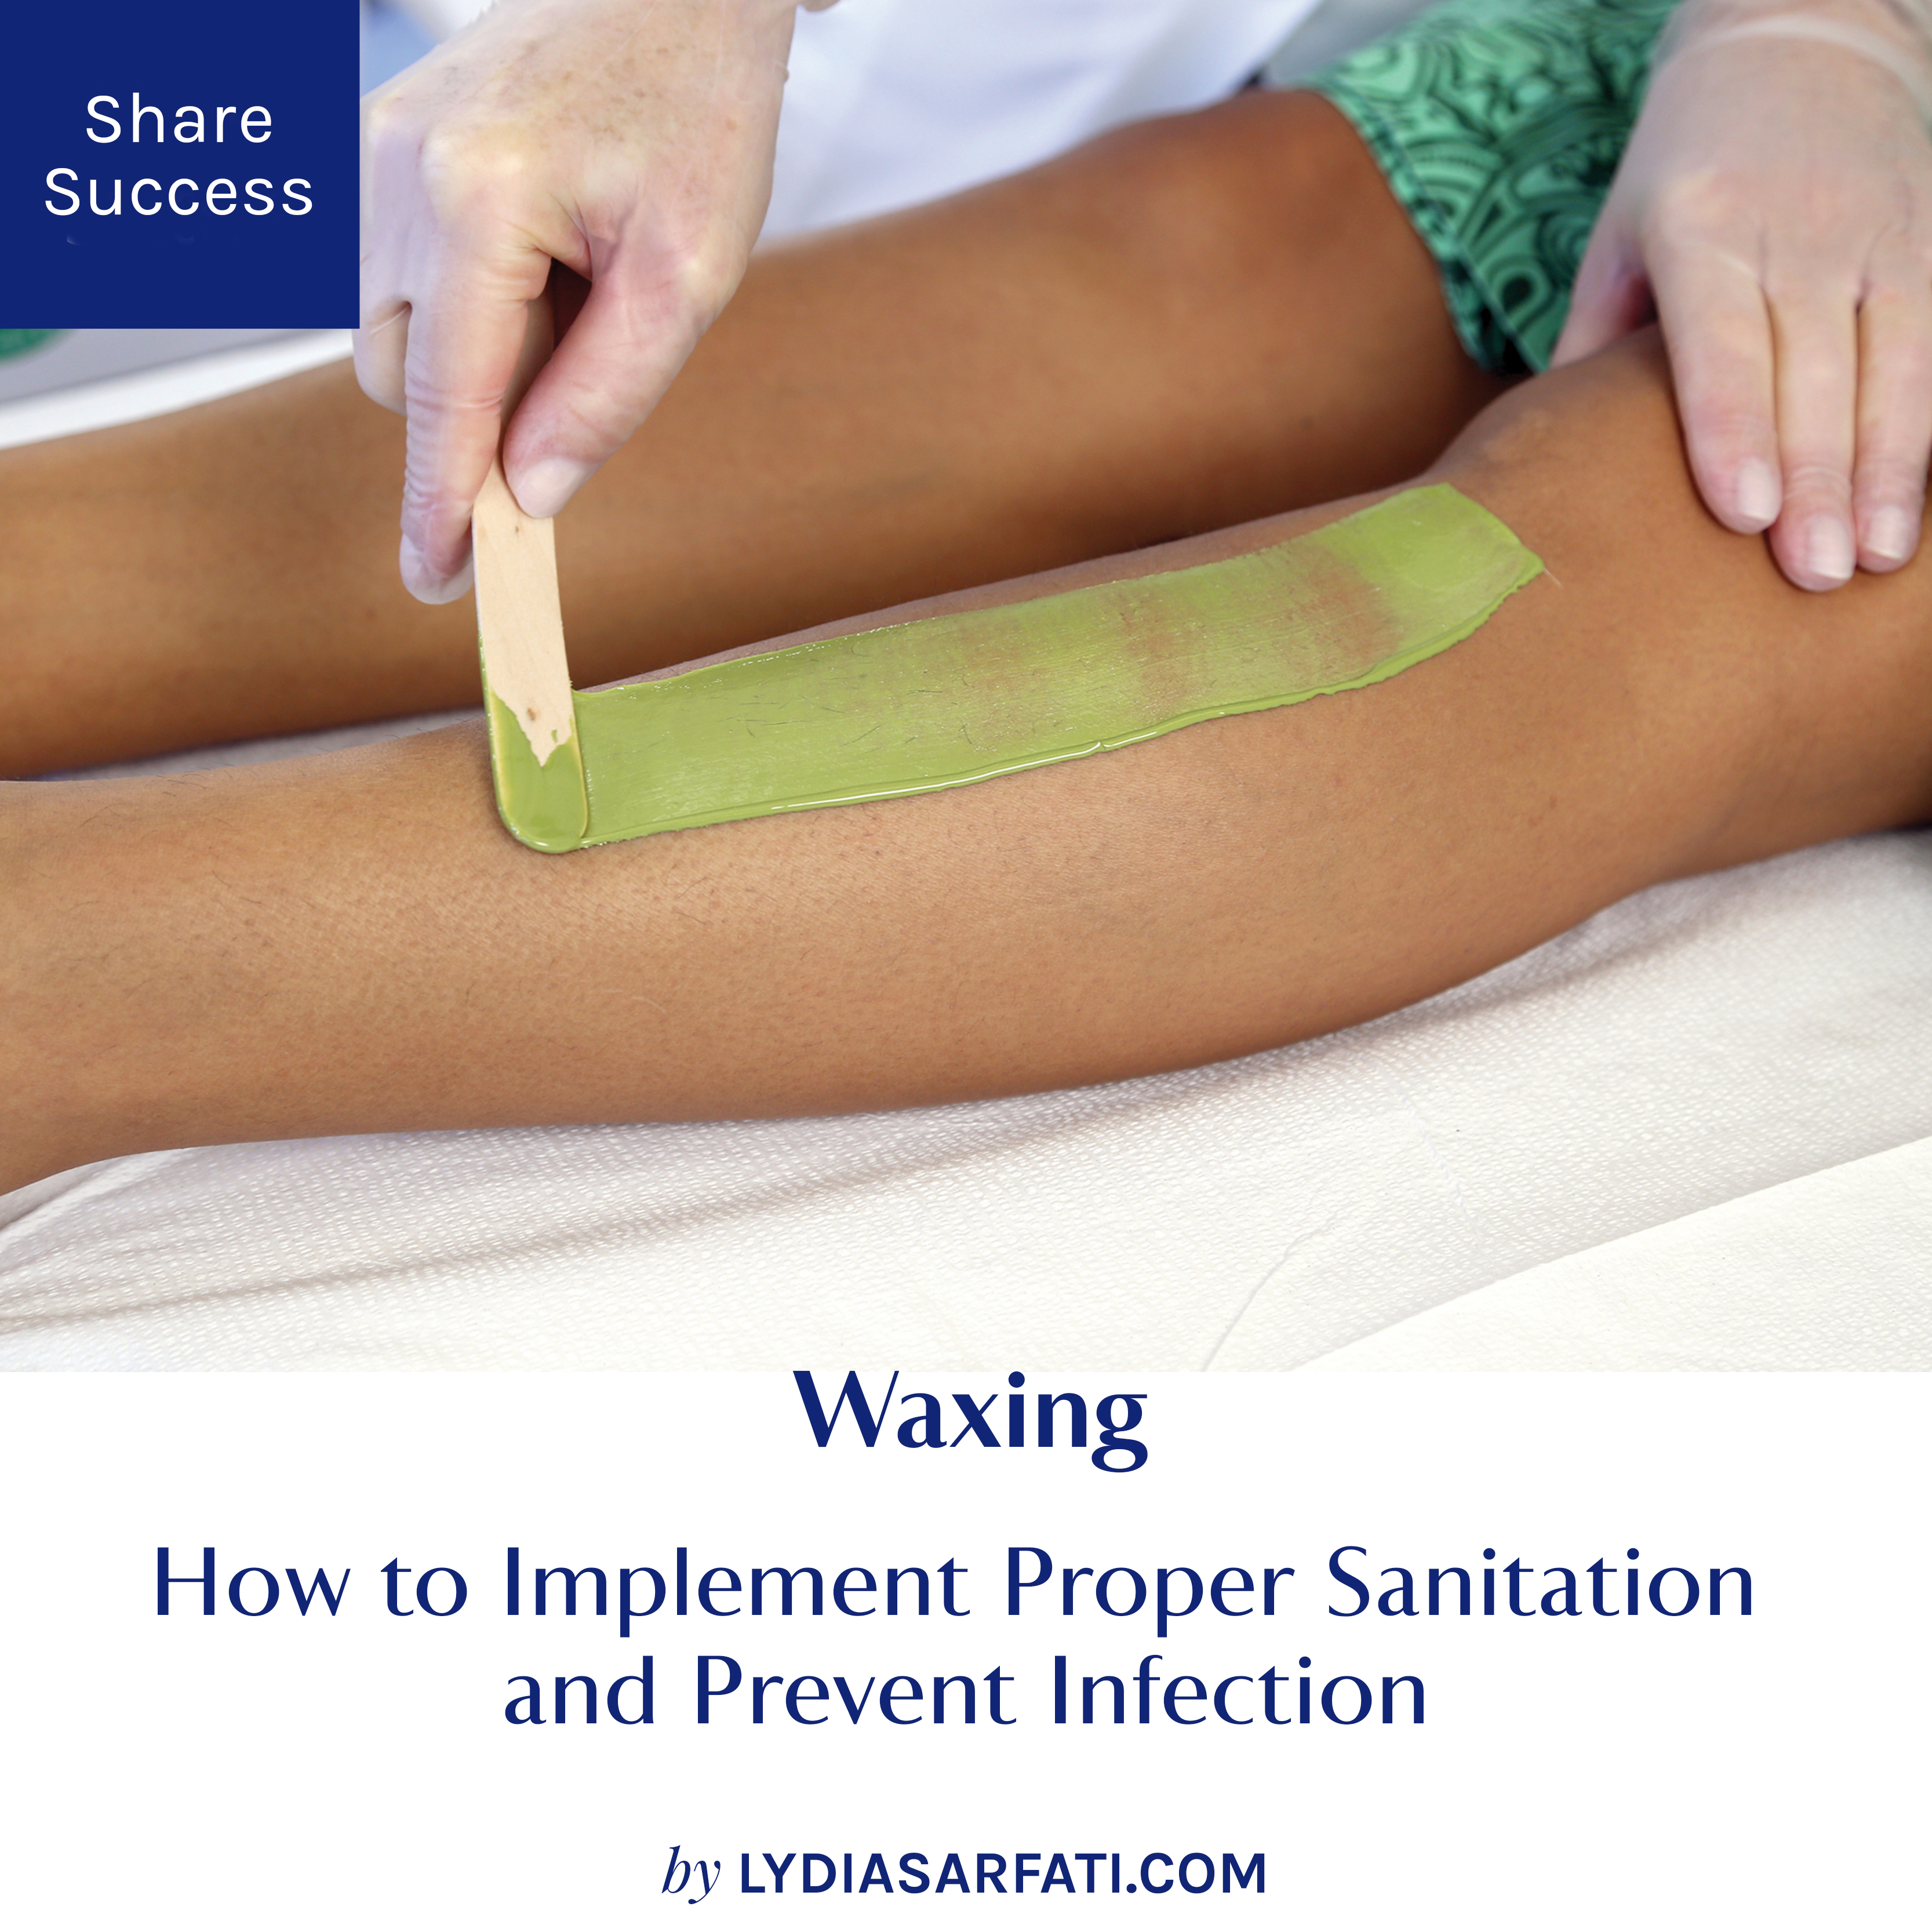 Do you use wax cleaner before hot waxing? : r/xcountryskiing